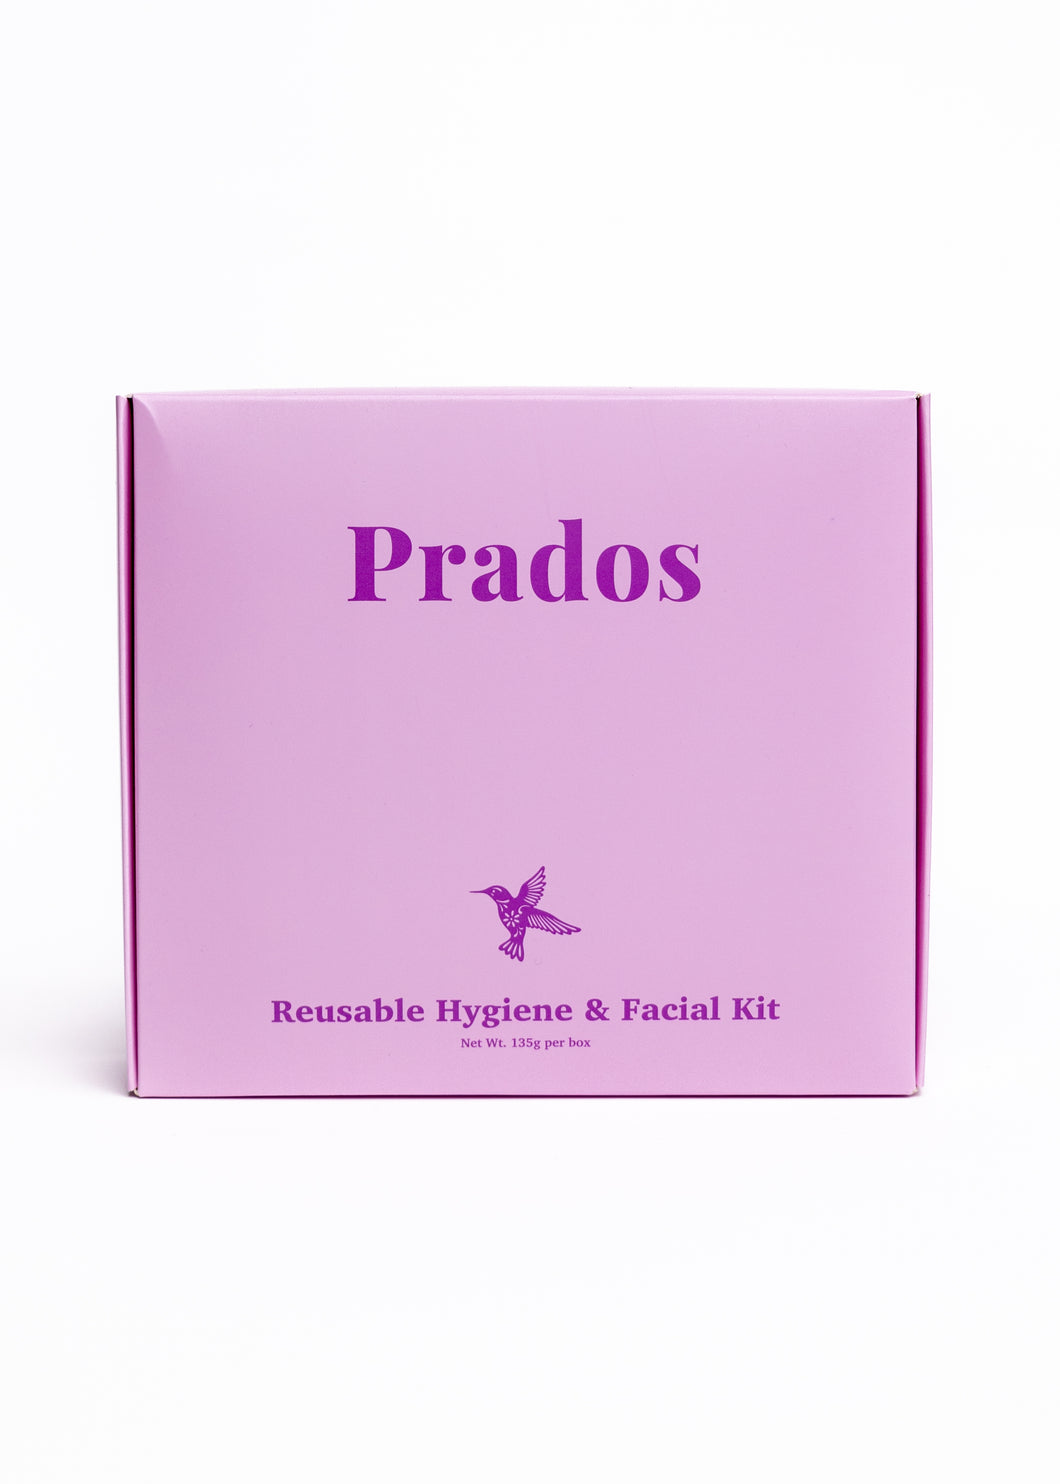 Prados Reusable Hygiene & Facial Kit